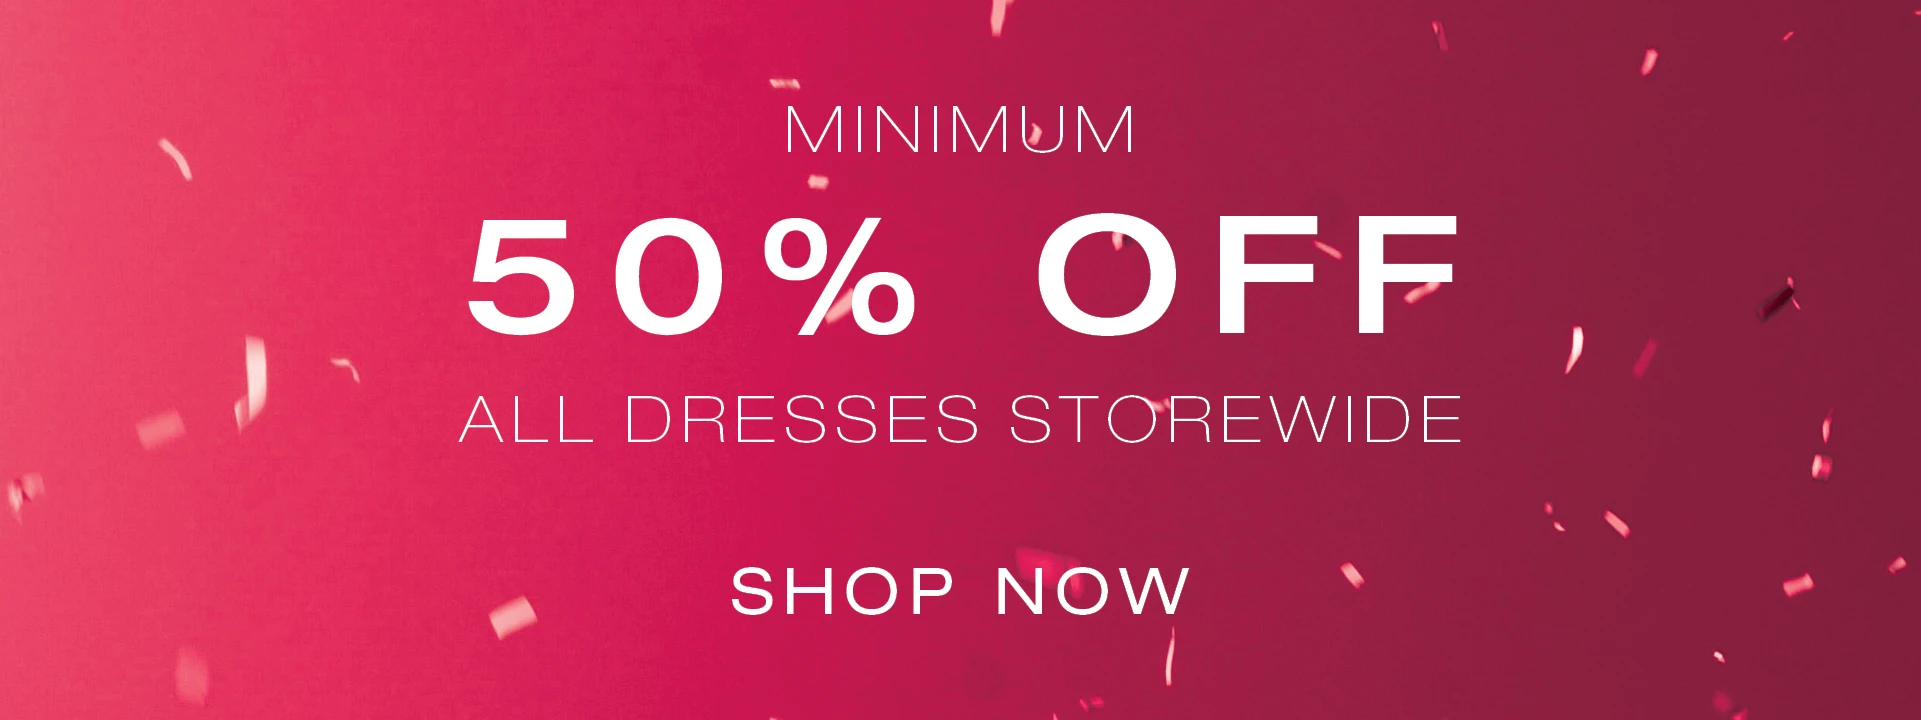 Save minimum 50% OFF on all dresses storewide